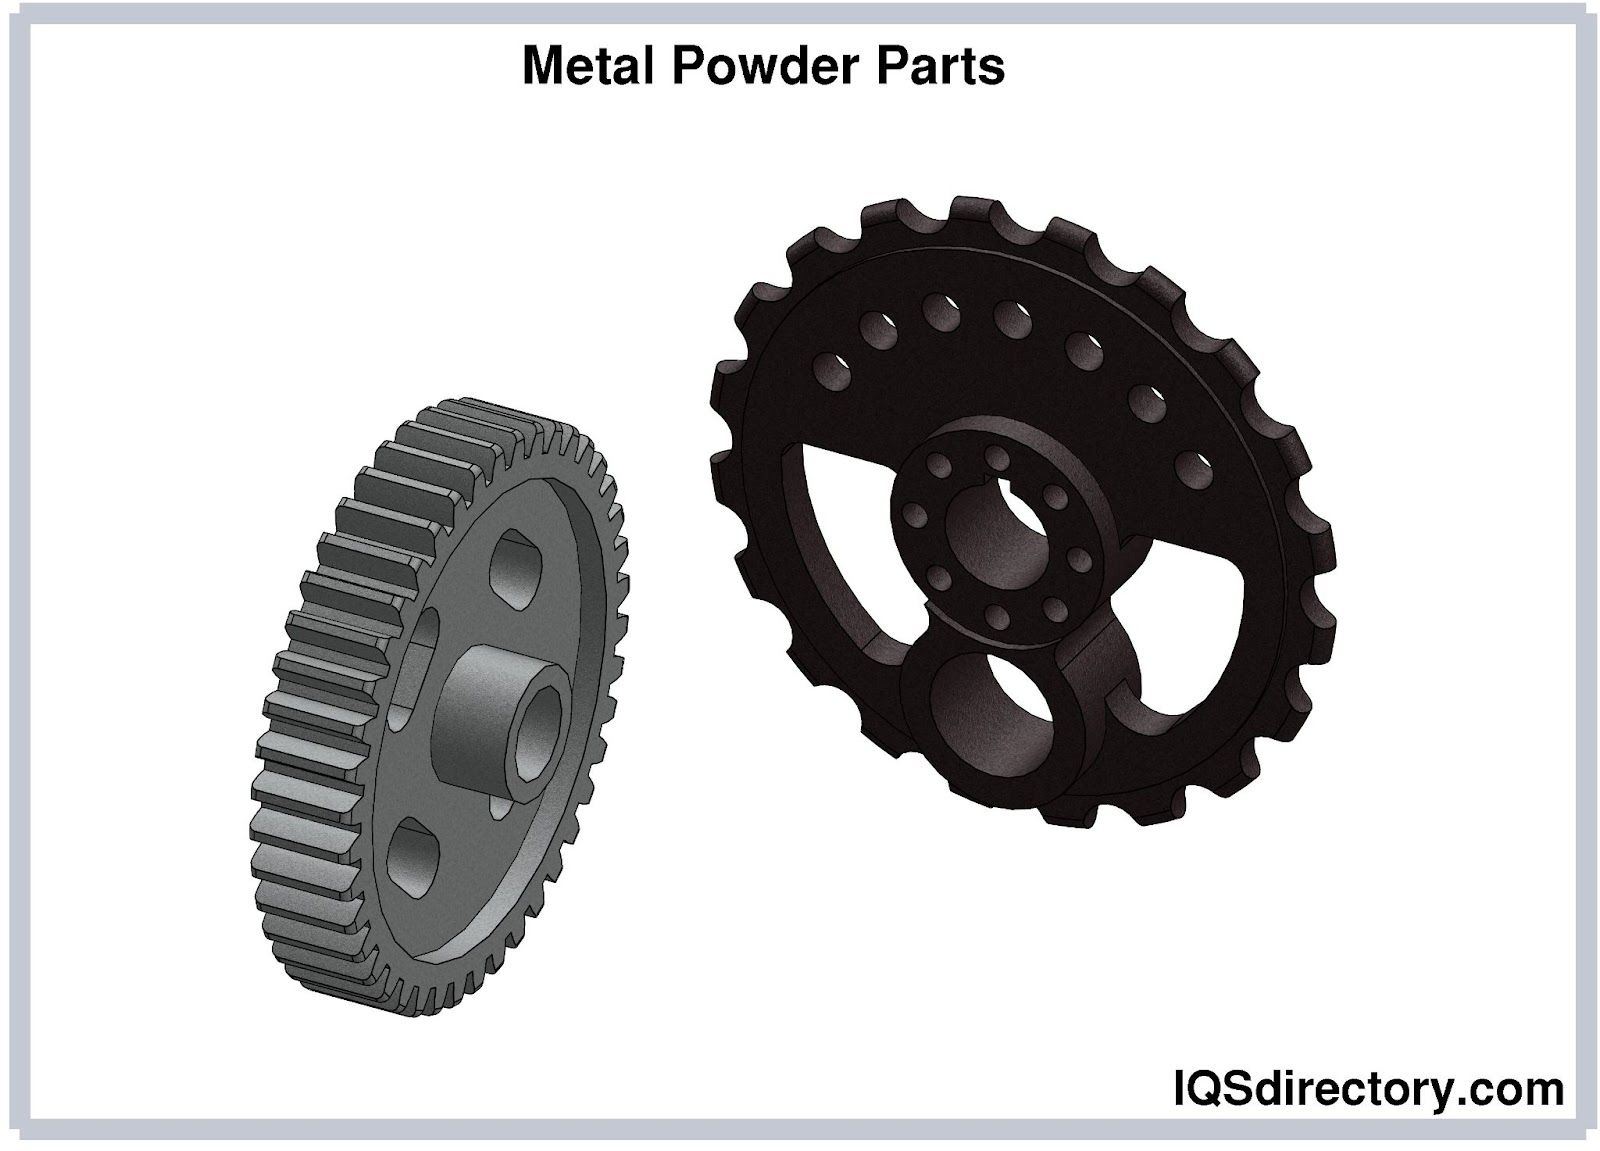 Metal Powder Parts